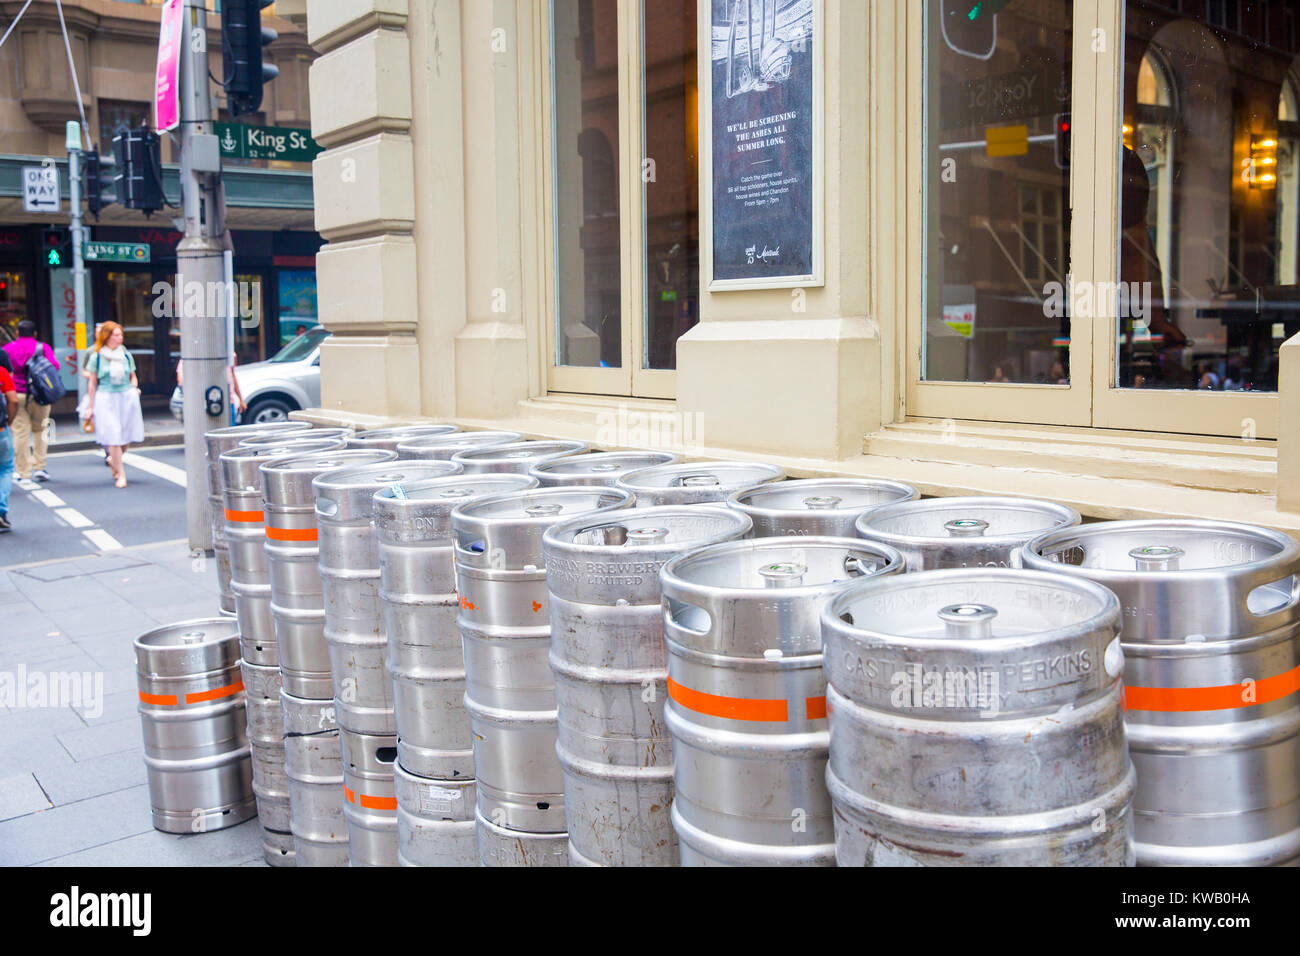 Beer barrels outside a bar public house in Sydney city centre,Australia Stock Photo